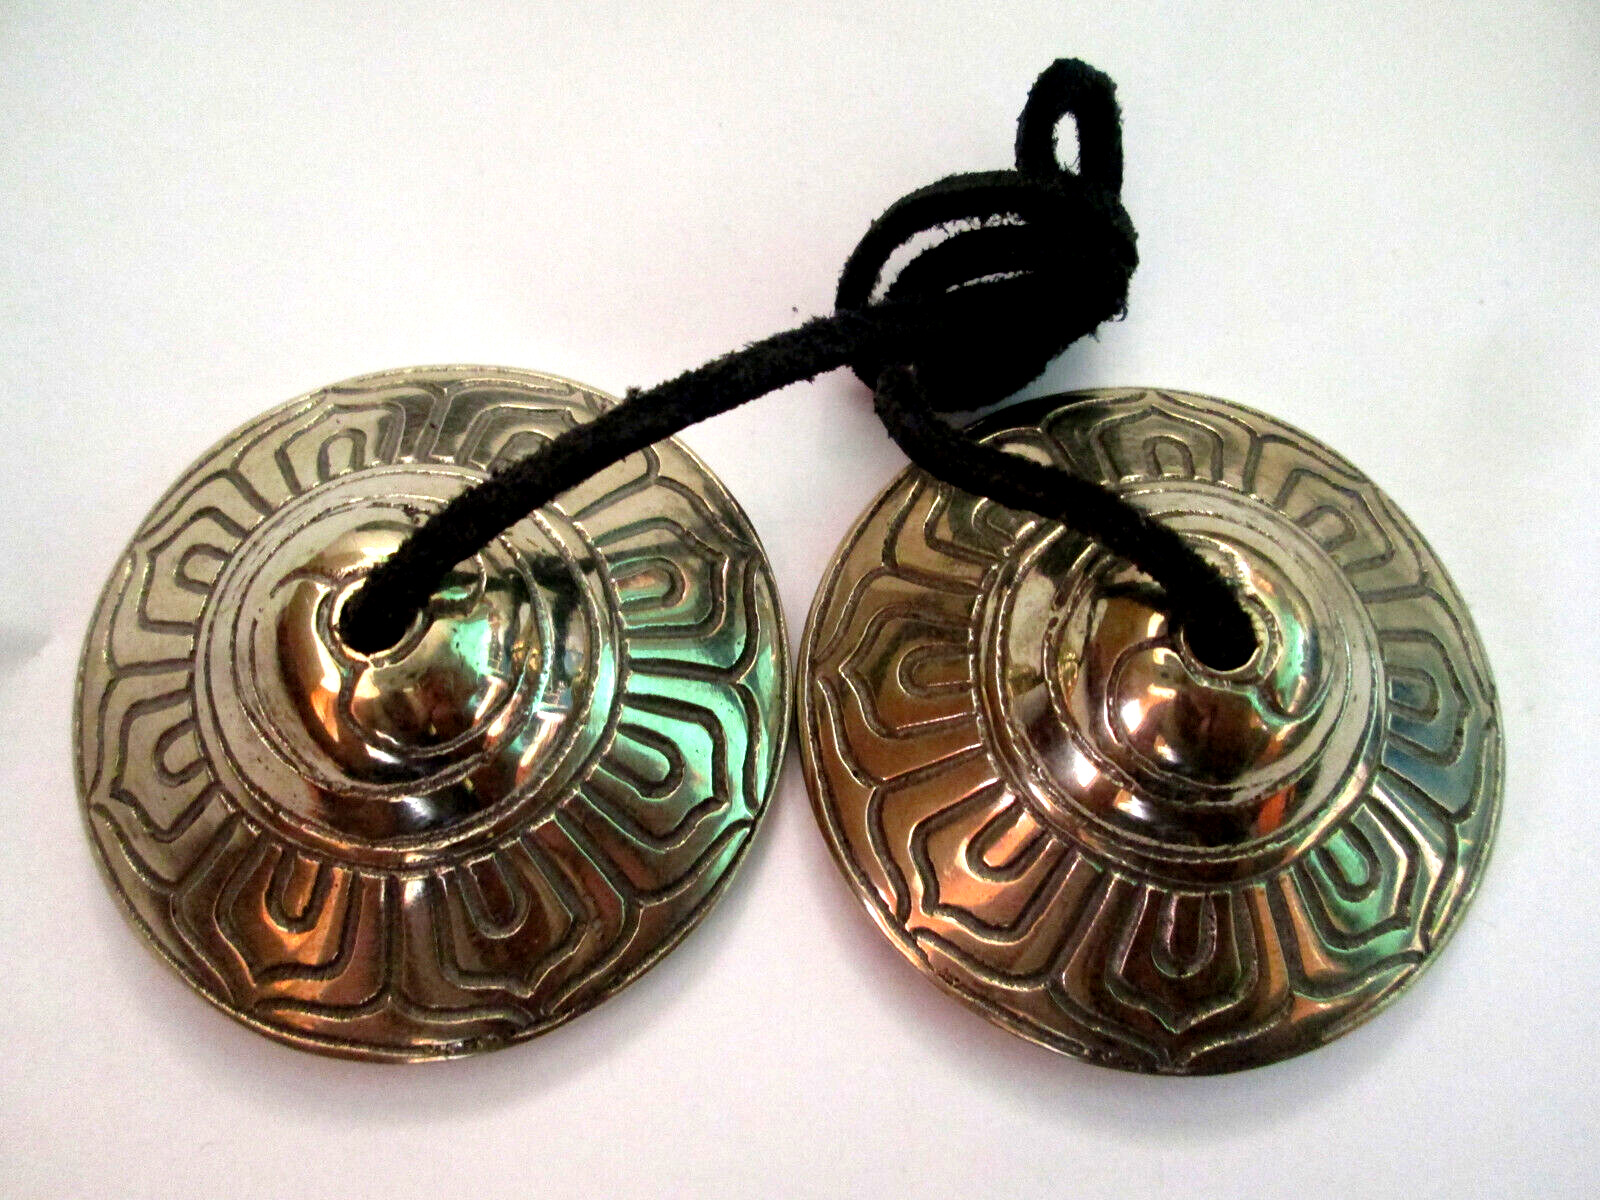 Tibetan Spiritual Buddhist Tingsha Cymbals Bells Chimes for Meditation Healing